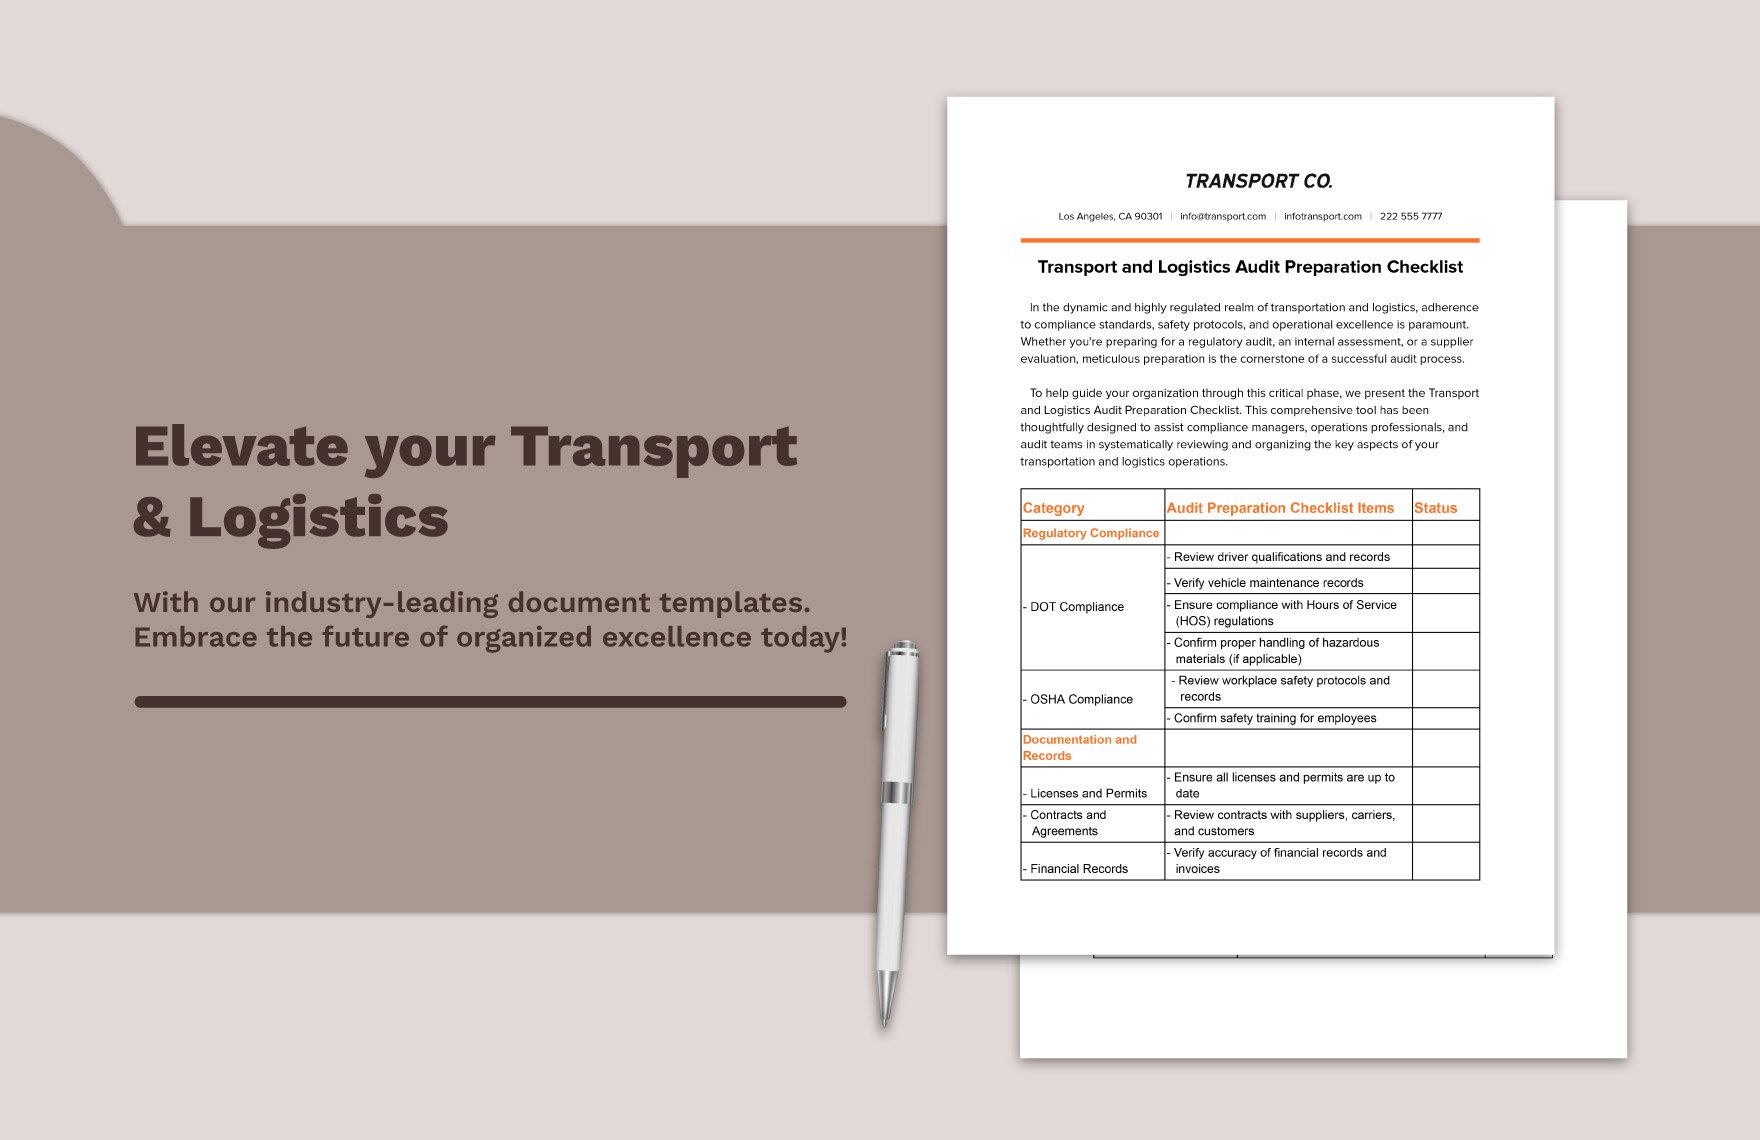 Transport and Logistics Audit Preparation Checklist Template